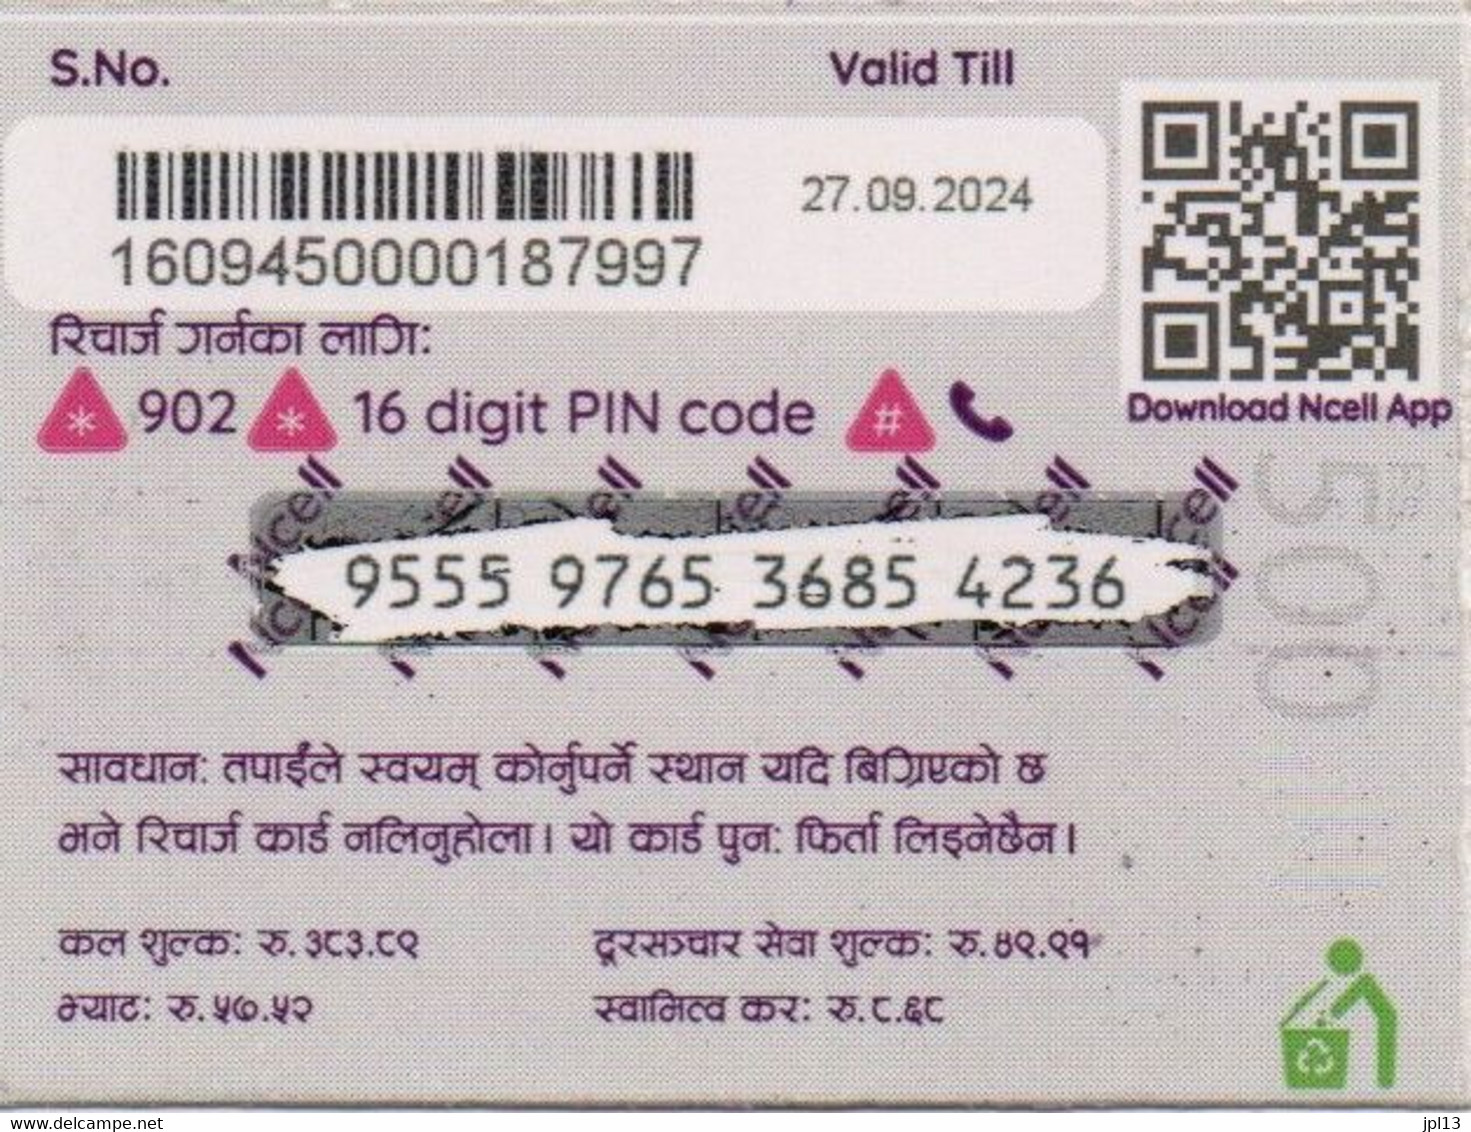 Recharge GSM - Népal - NCell - Rs. 500, Format 1/2,exp.27.09.2024 - Népal